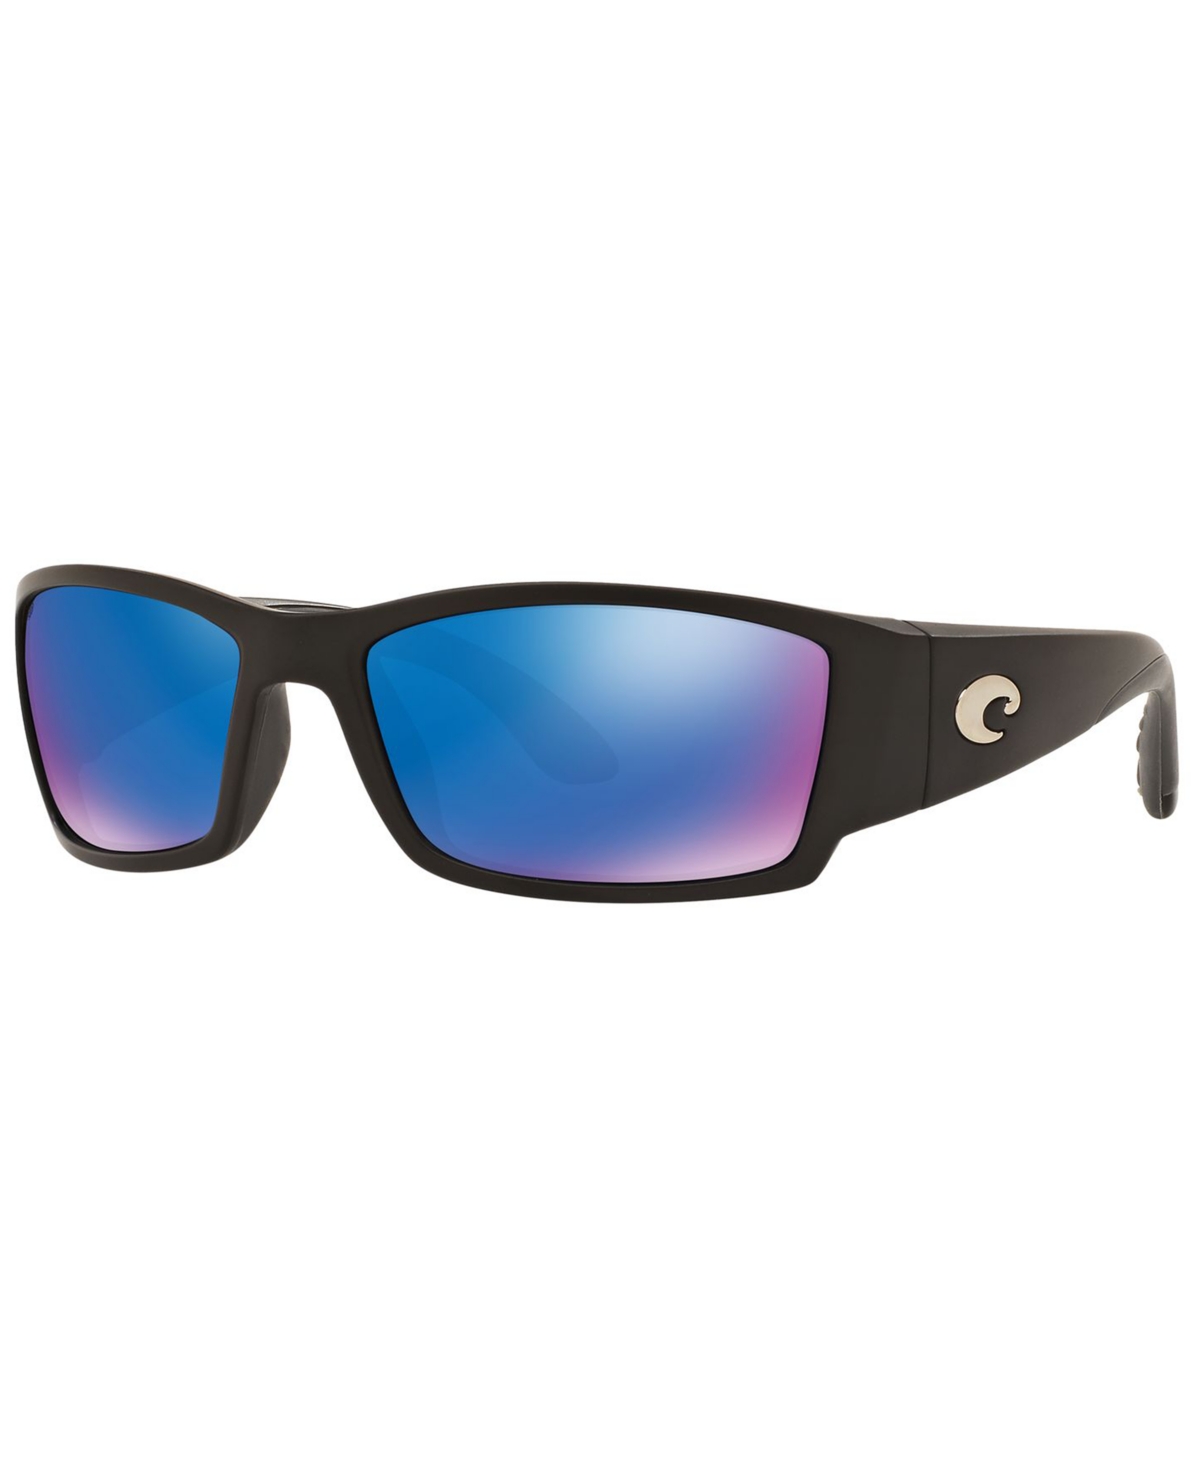 Polarized Sunglasses, Corbina 61P - BLACK/BLUE MIR POL